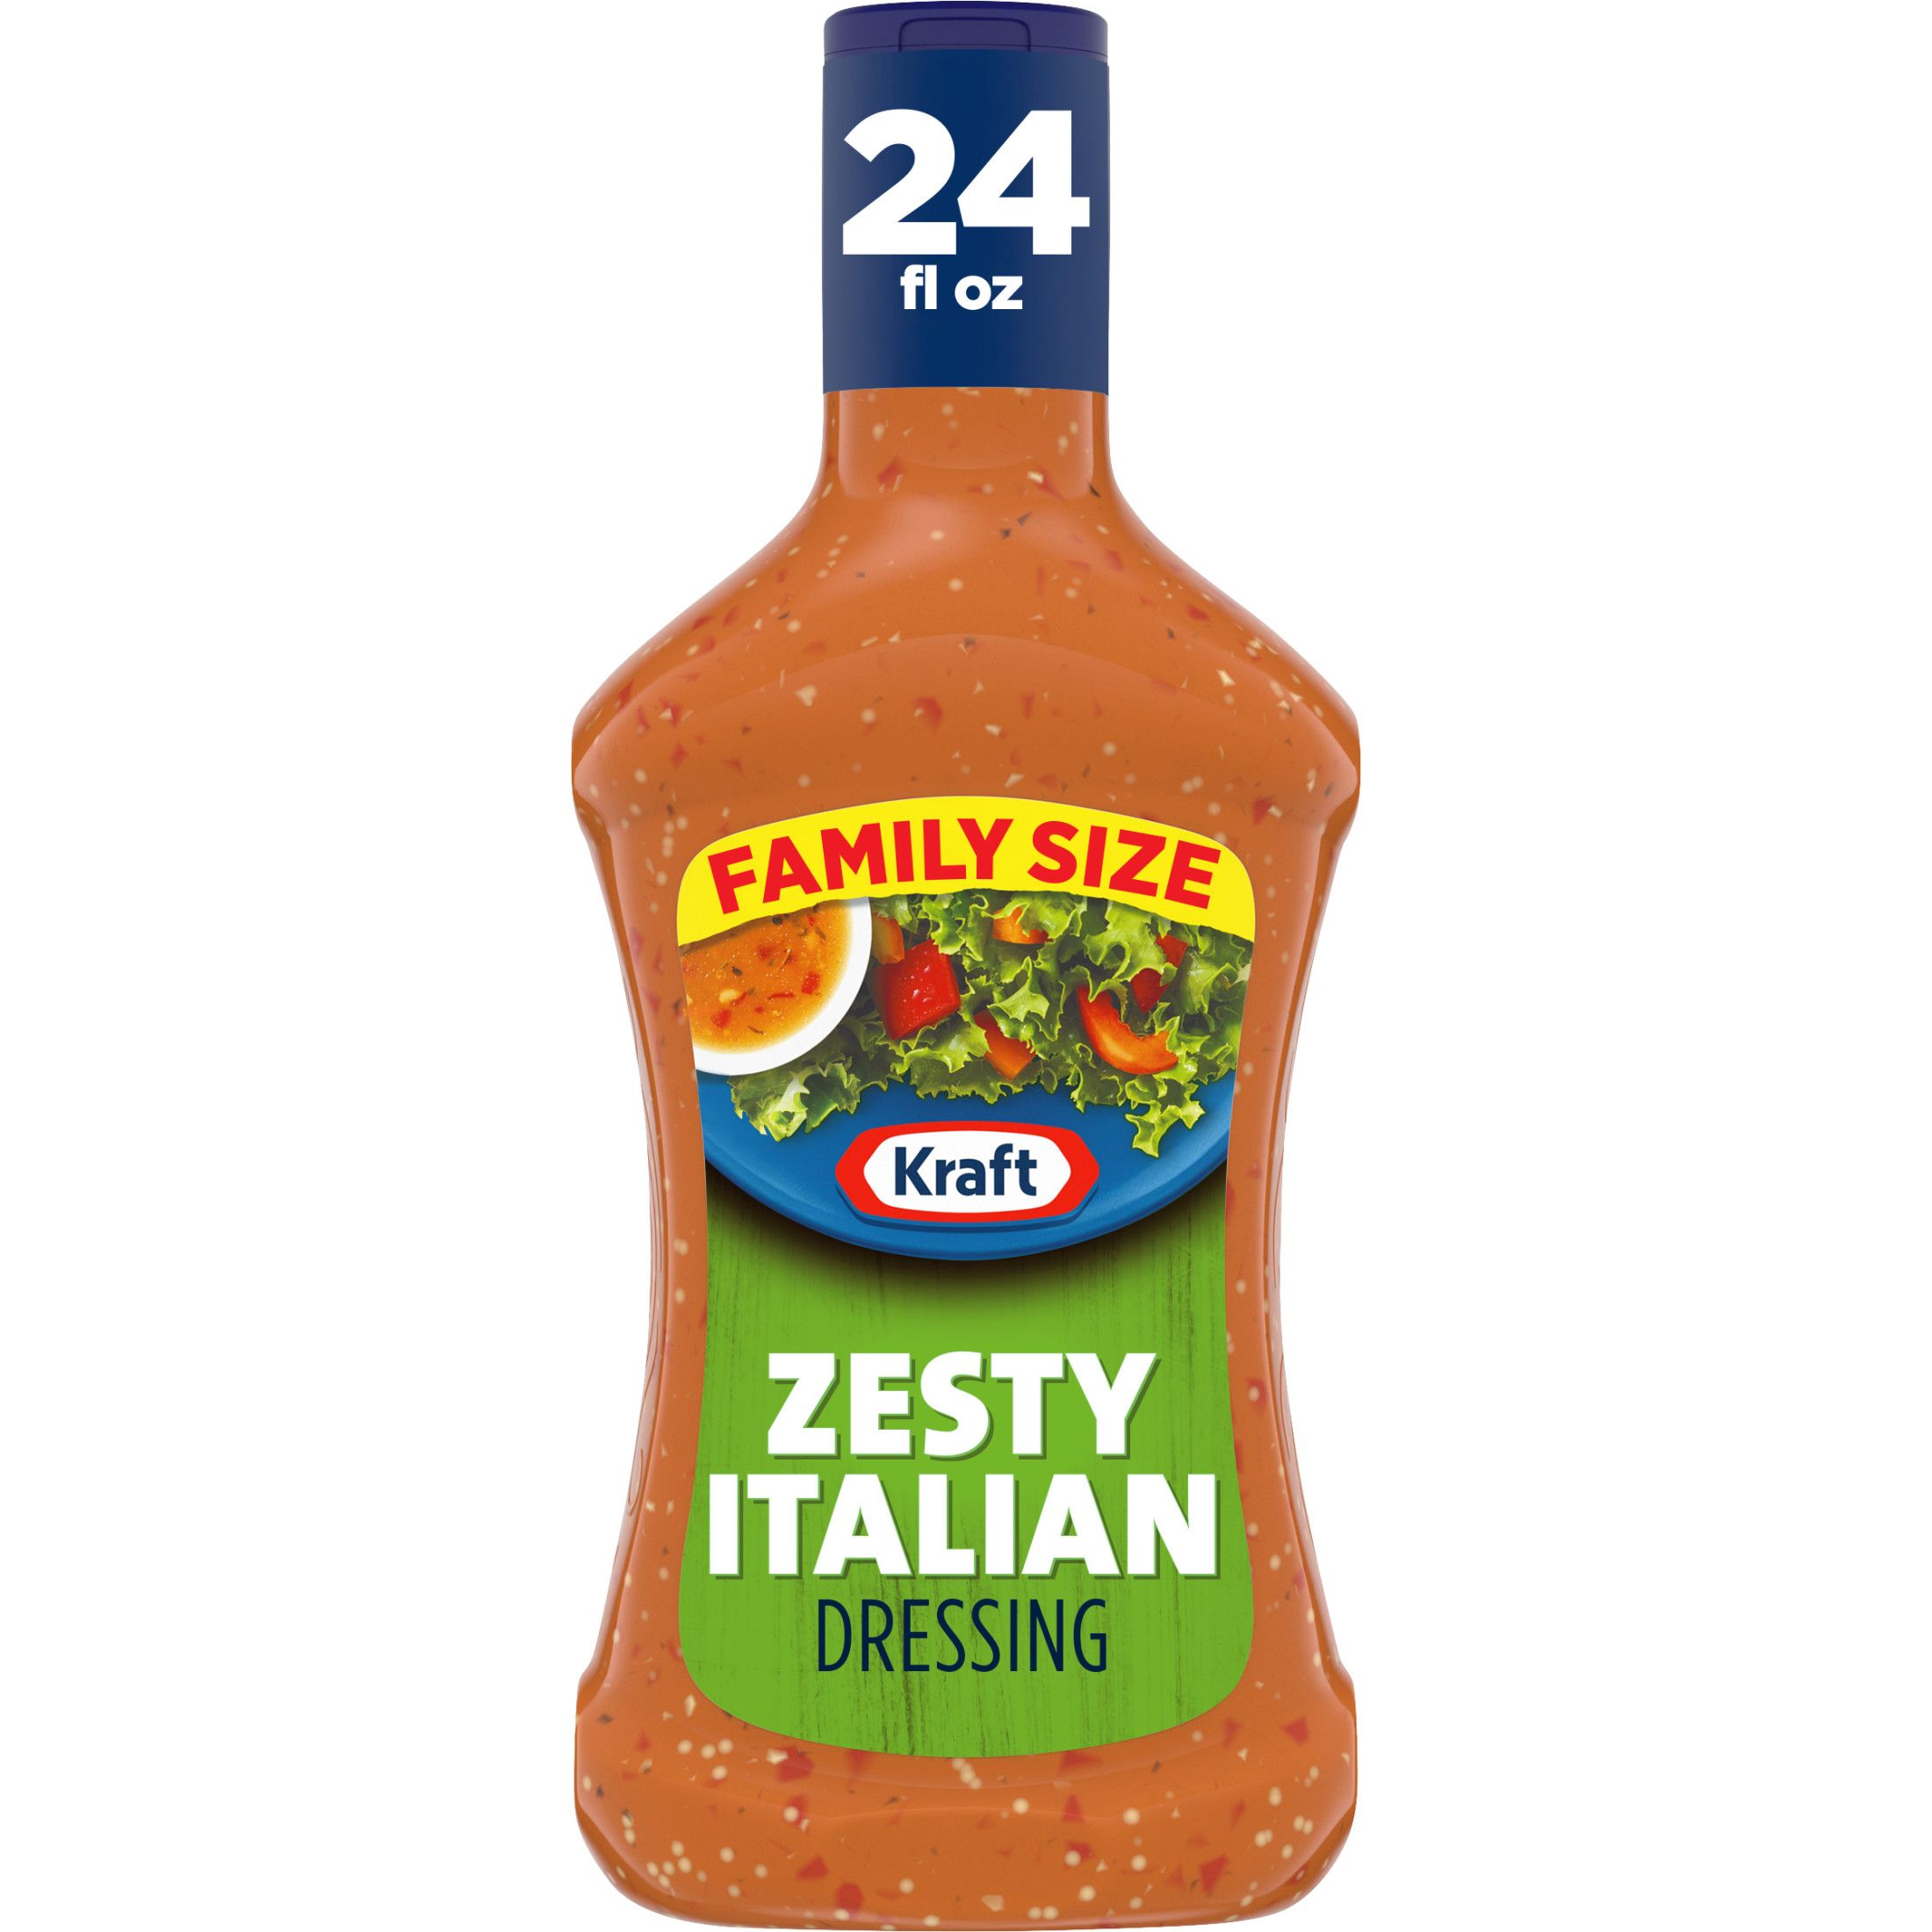 Kraft Zesty Italian Salad Dressing Family Size, 24 fl oz Bottle - image 1 of 12